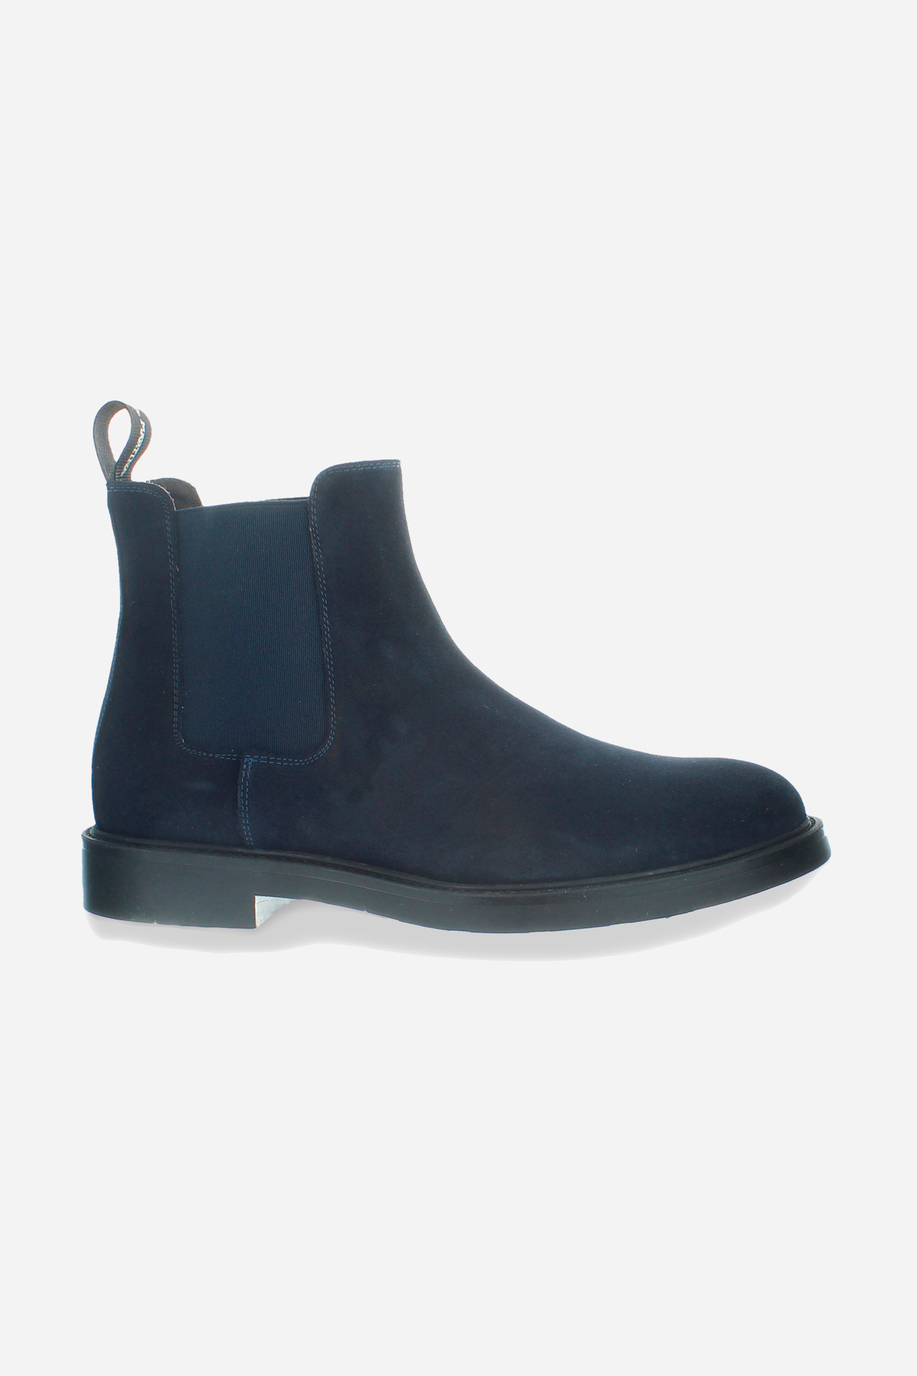 Men’s ankle boot in suede - Formal Shoes | La Martina - Official Online Shop